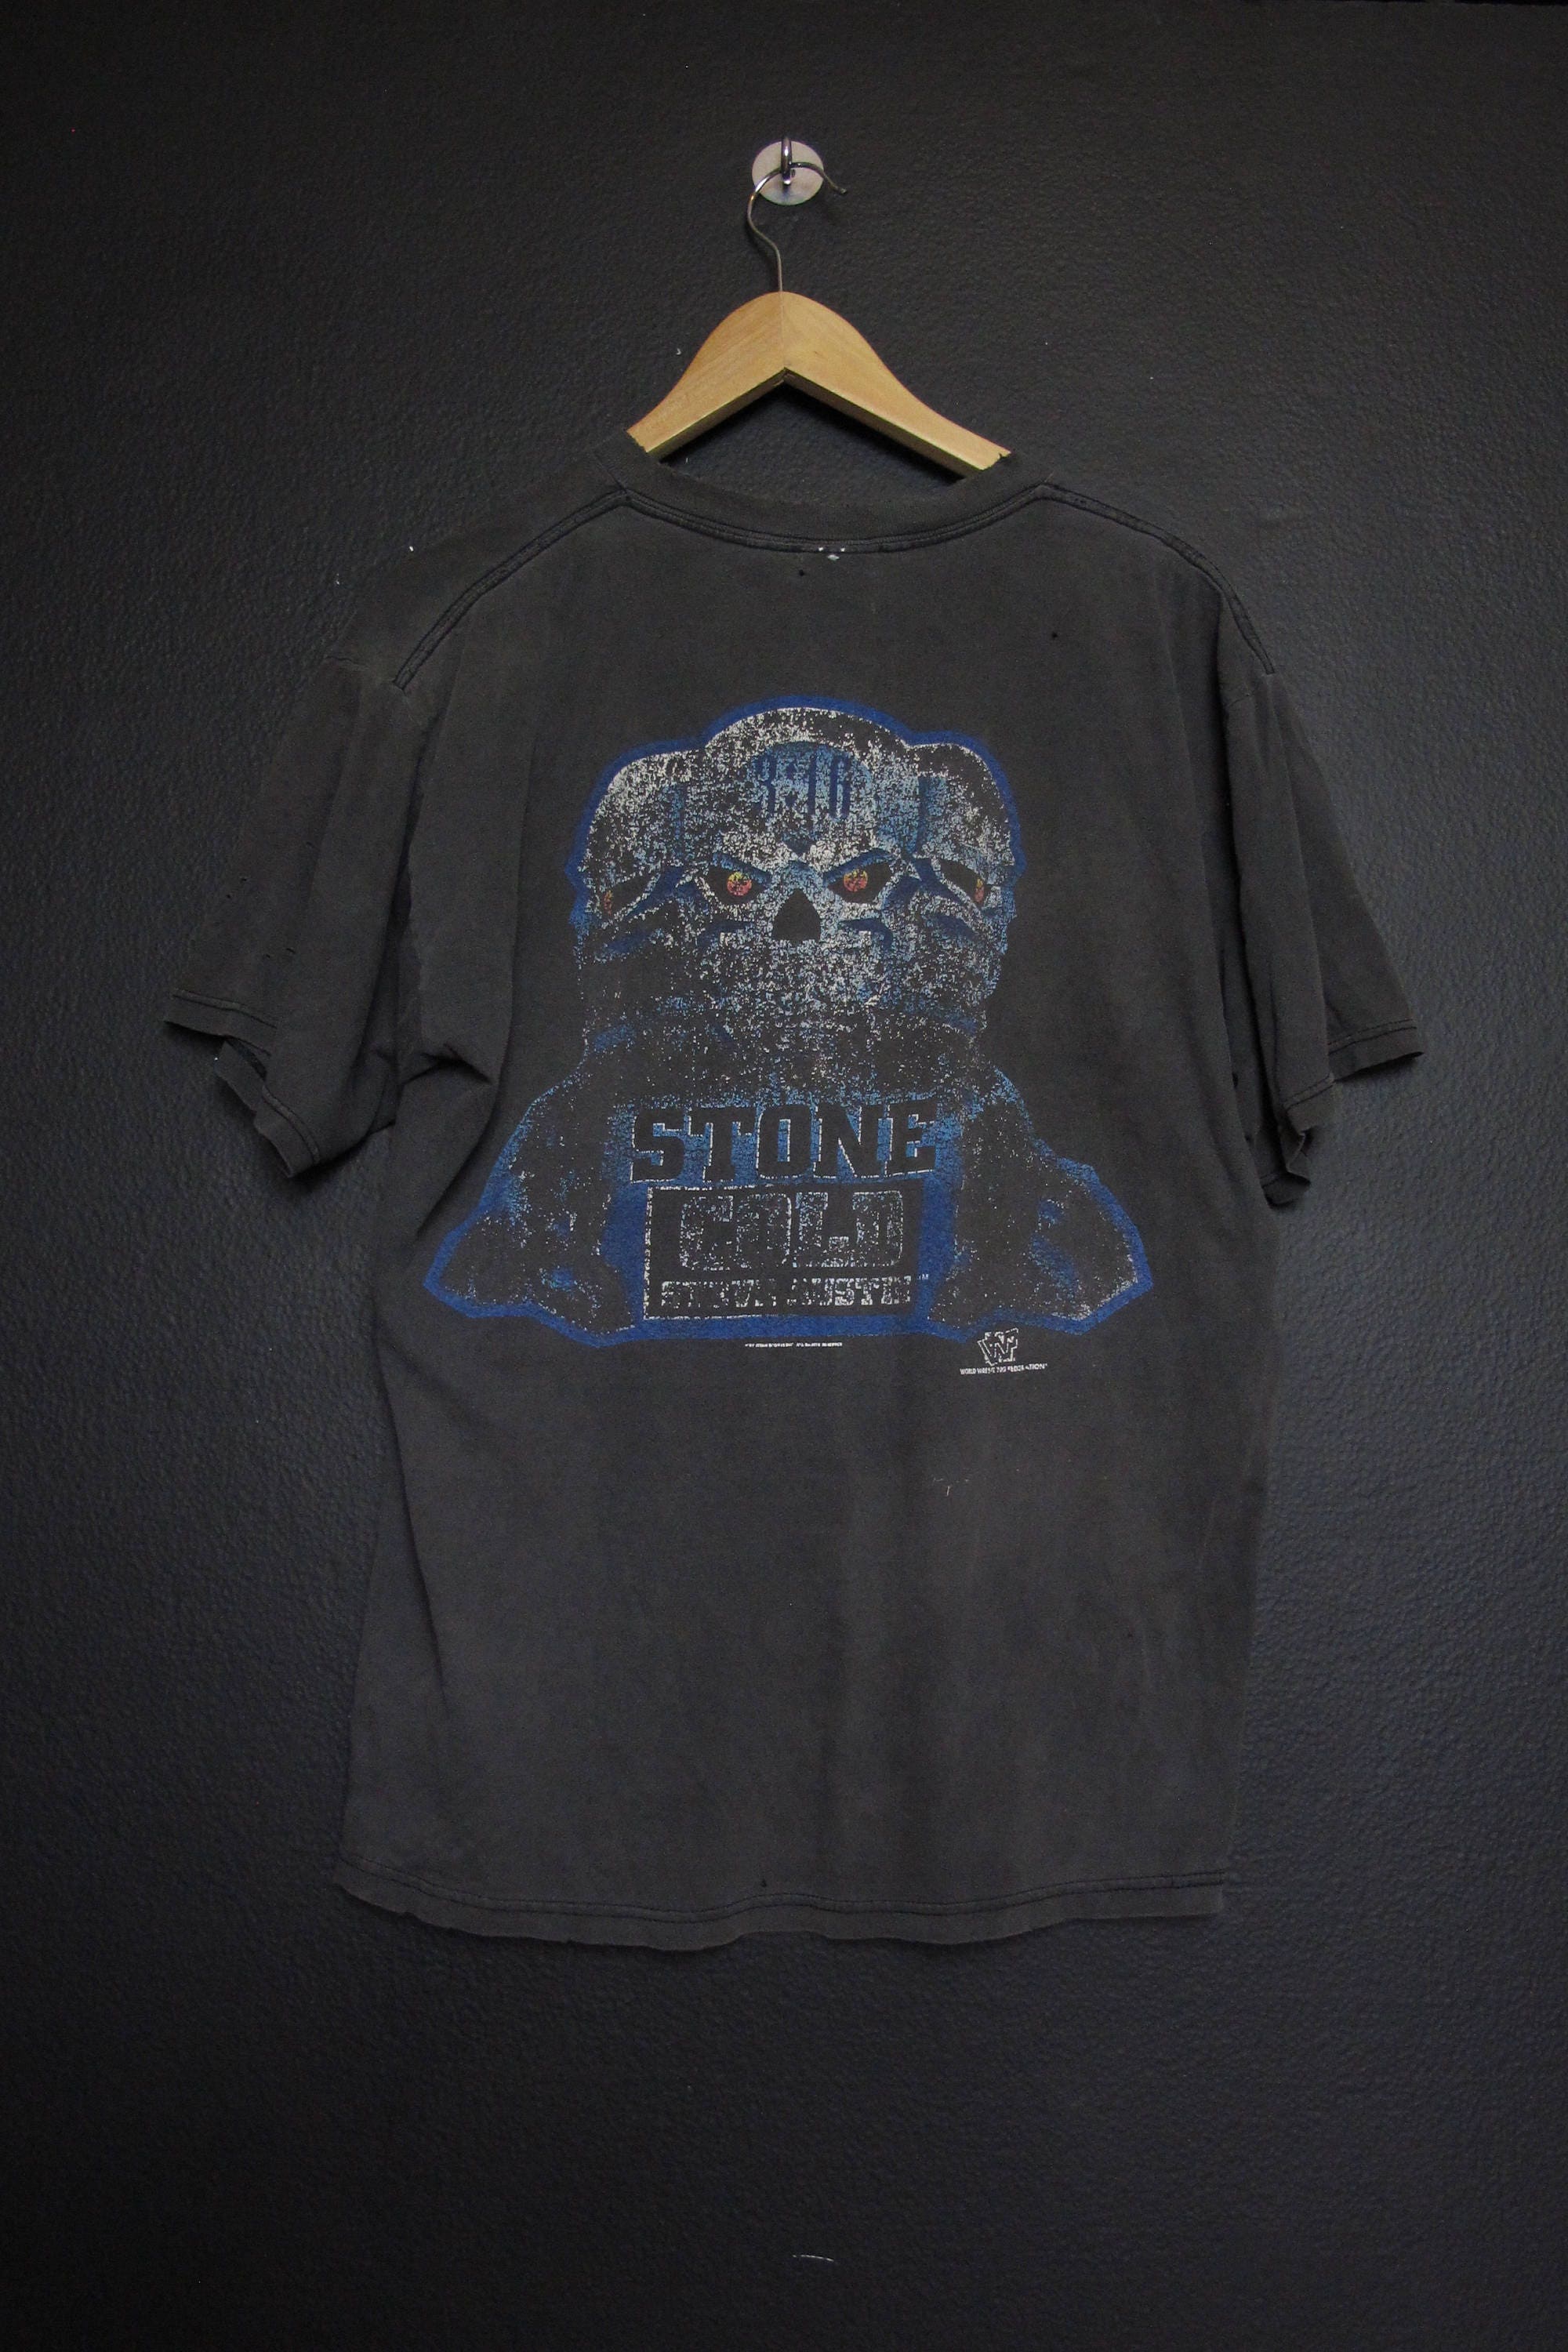 Stone Cold Steve Austin 3:16 WWE WWF Wrestling 1990's Vintage Tshirt